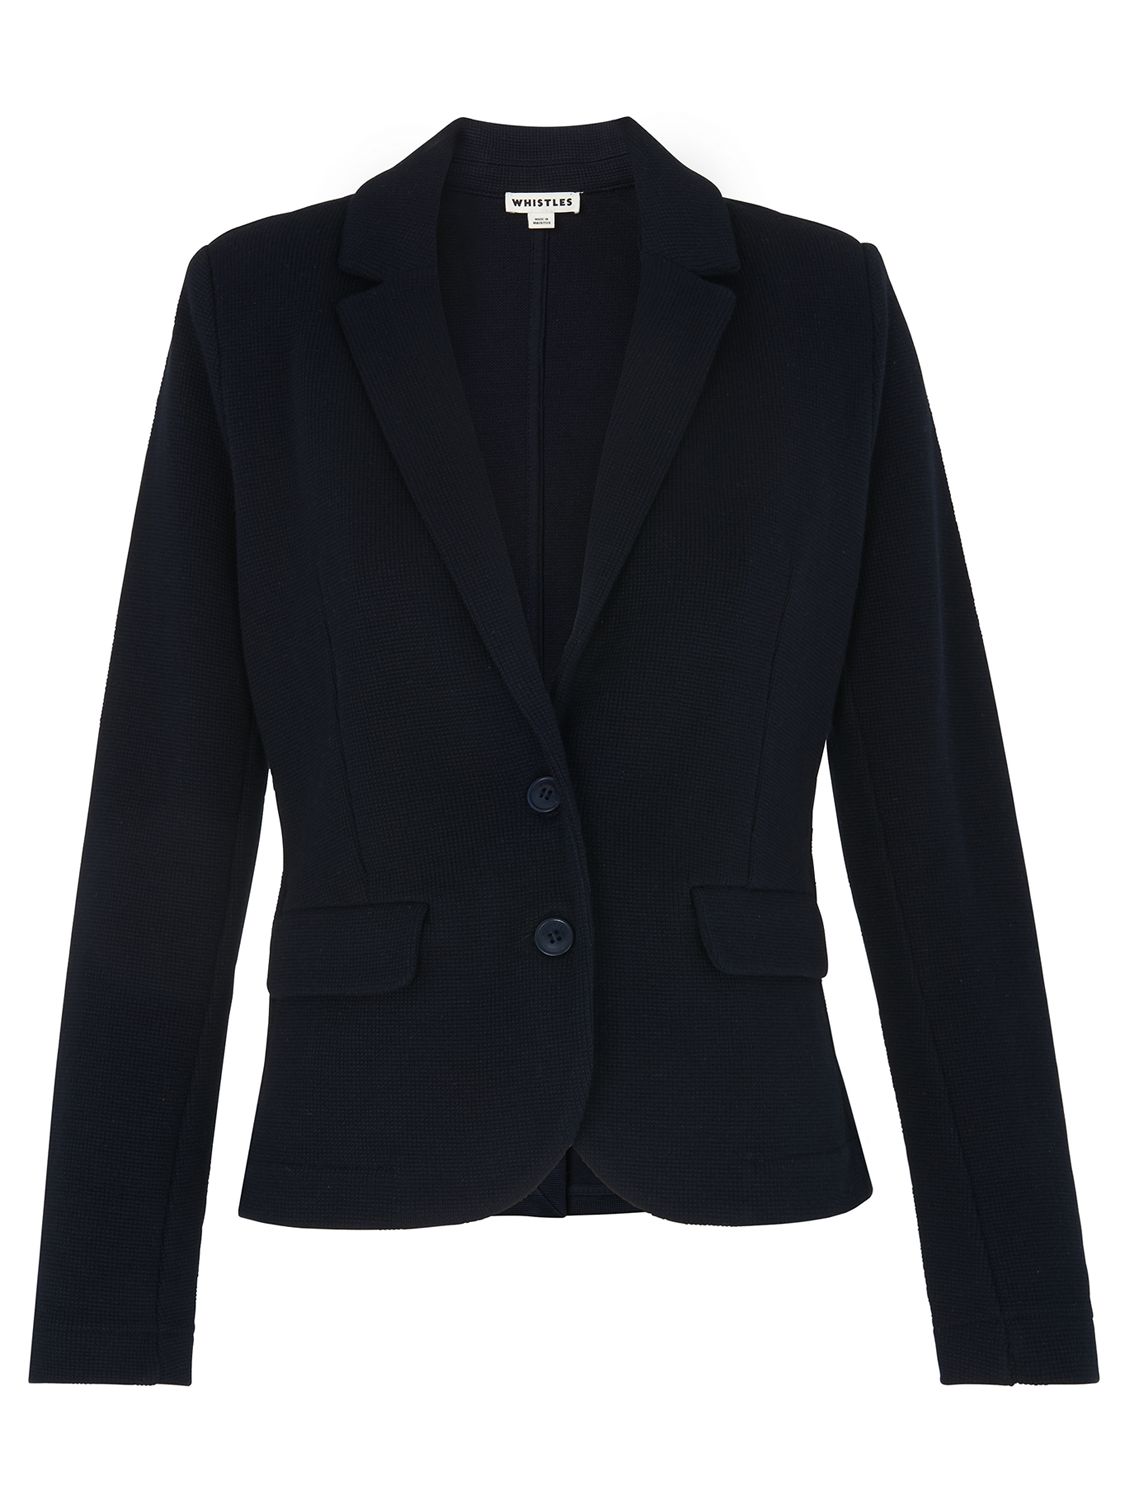 Whistles Slim Jersey Jacket, French Navy at John Lewis & Partners